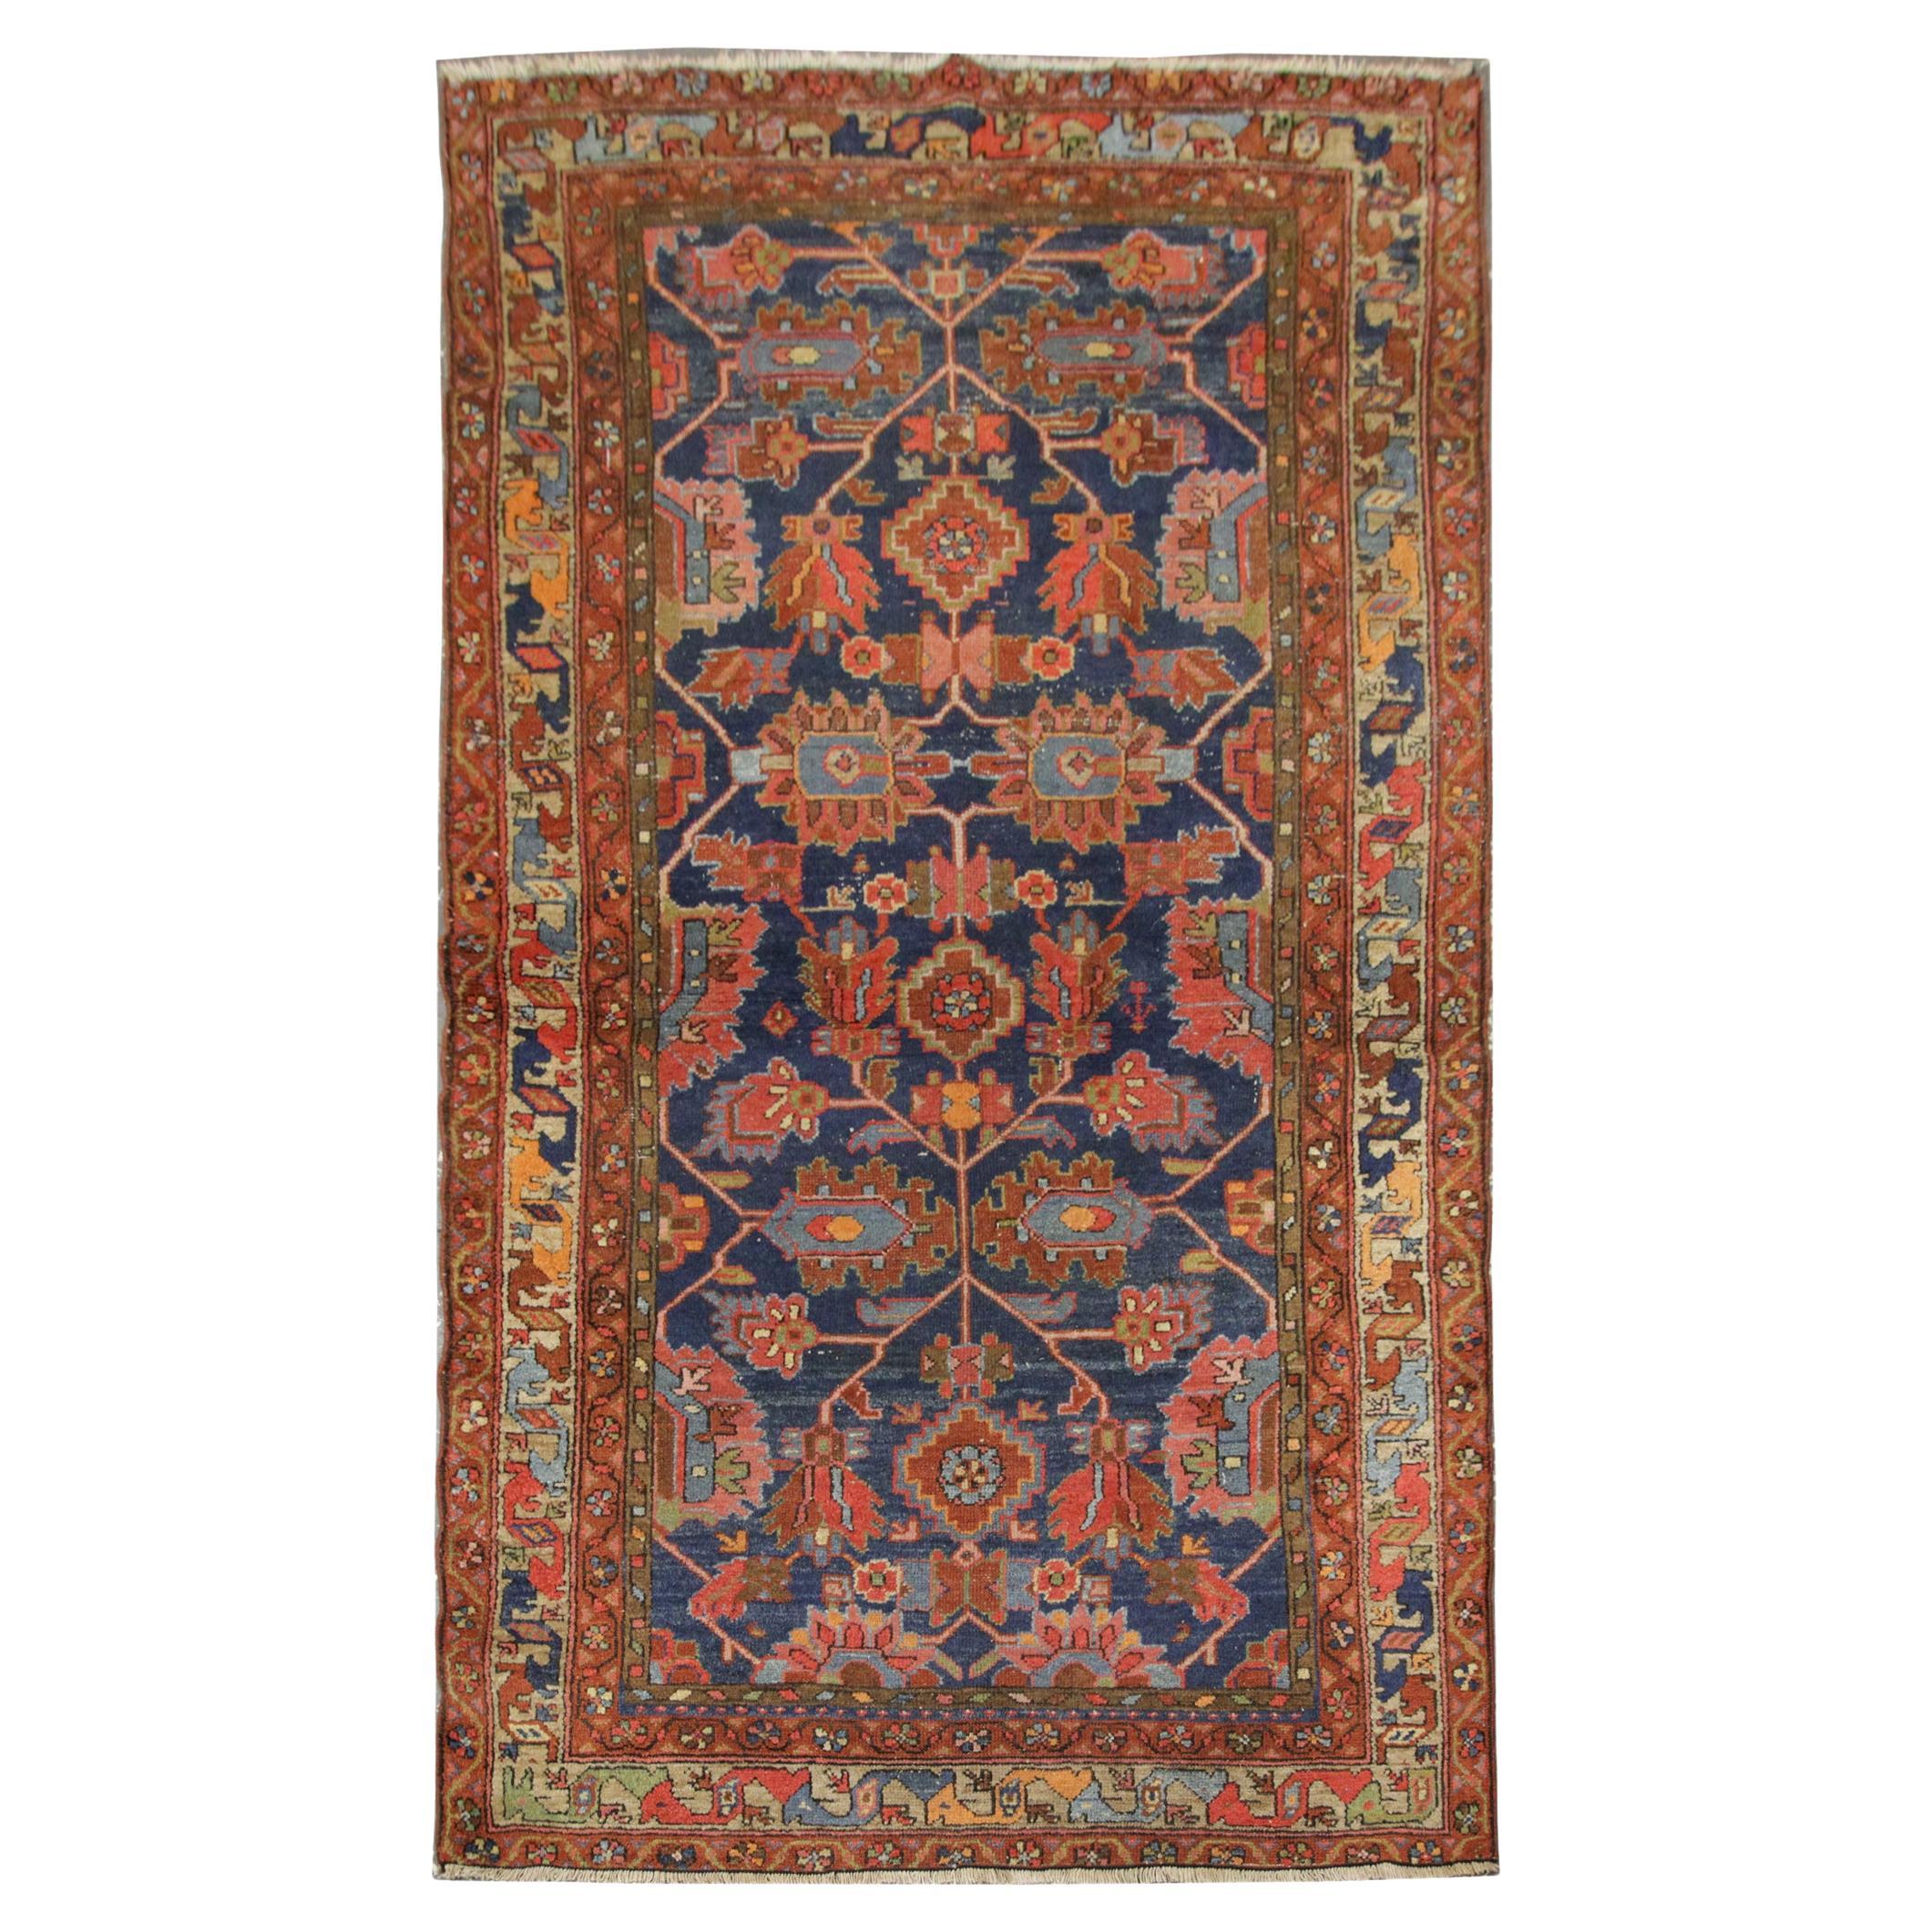 Antique Caucasian Carpet Handmade All Over Design Living Room Rug CHR79 For Sale